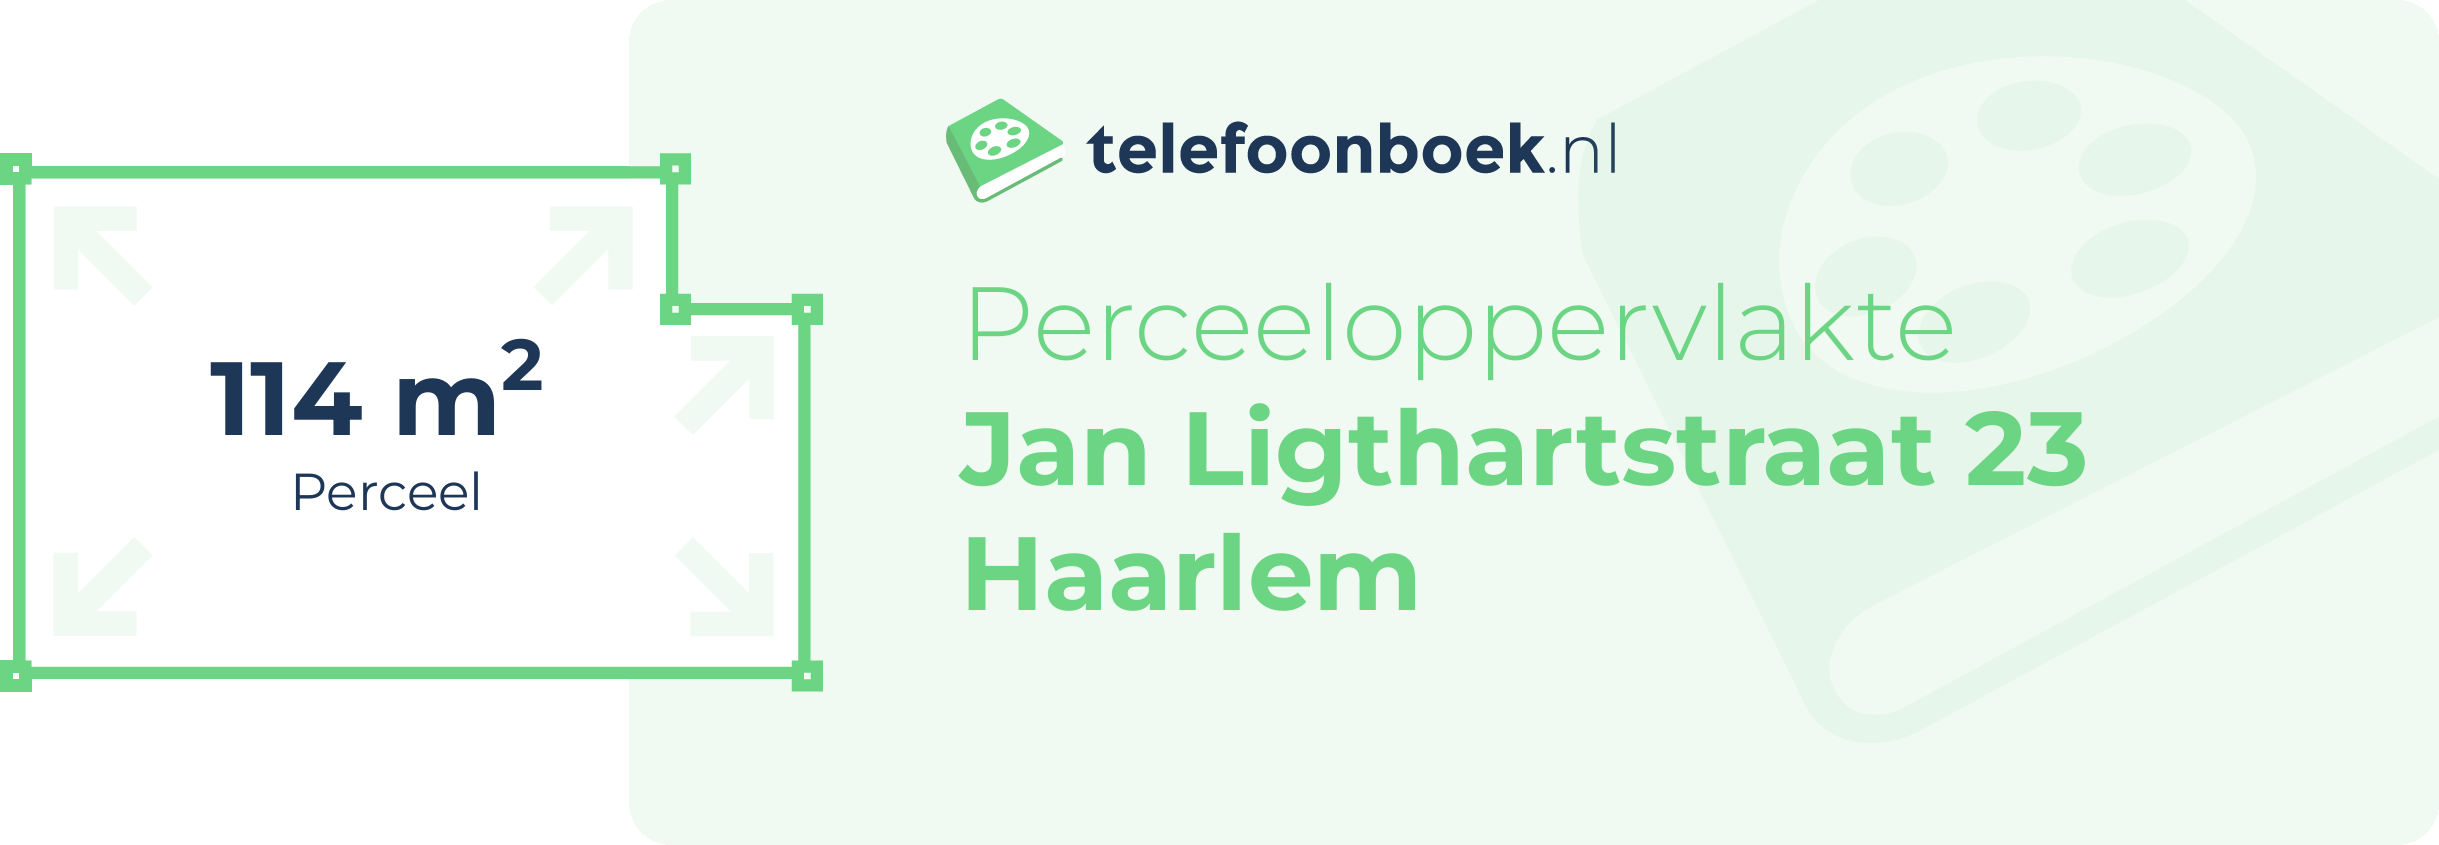 Perceeloppervlakte Jan Ligthartstraat 23 Haarlem